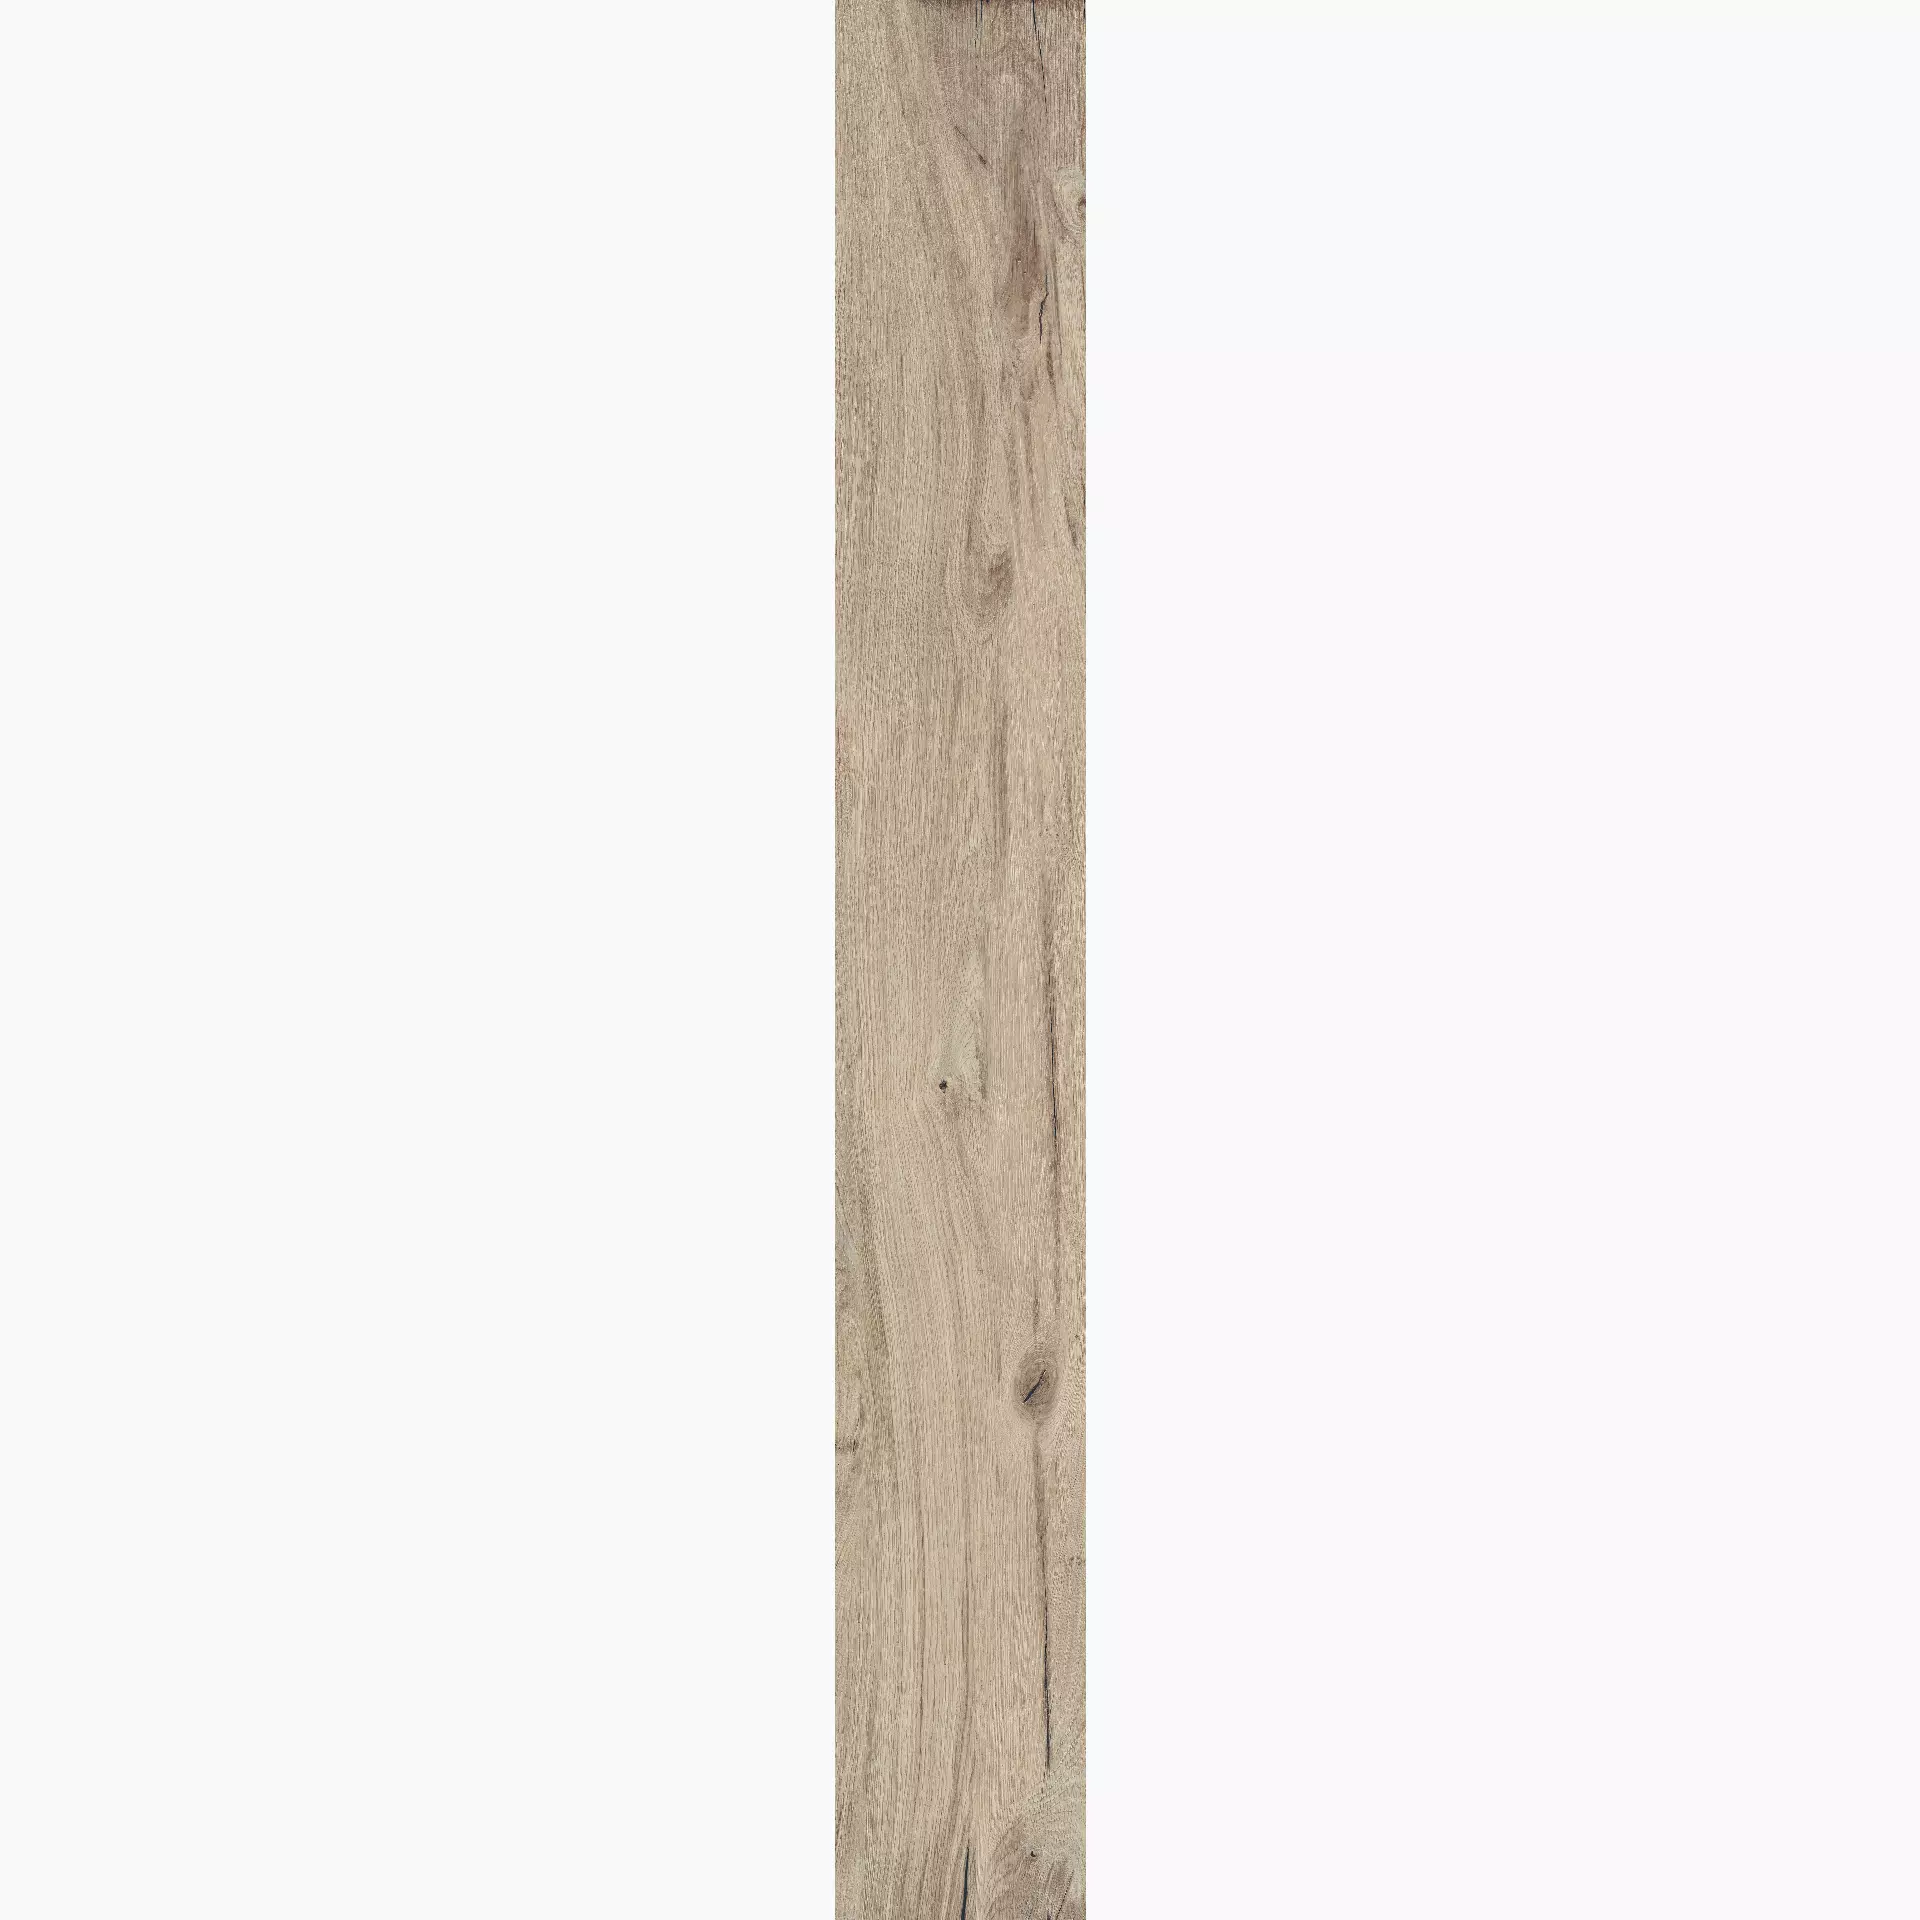 Flaviker Nordik Wood Beige Naturale PF60003672 26x200cm rectified 6mm